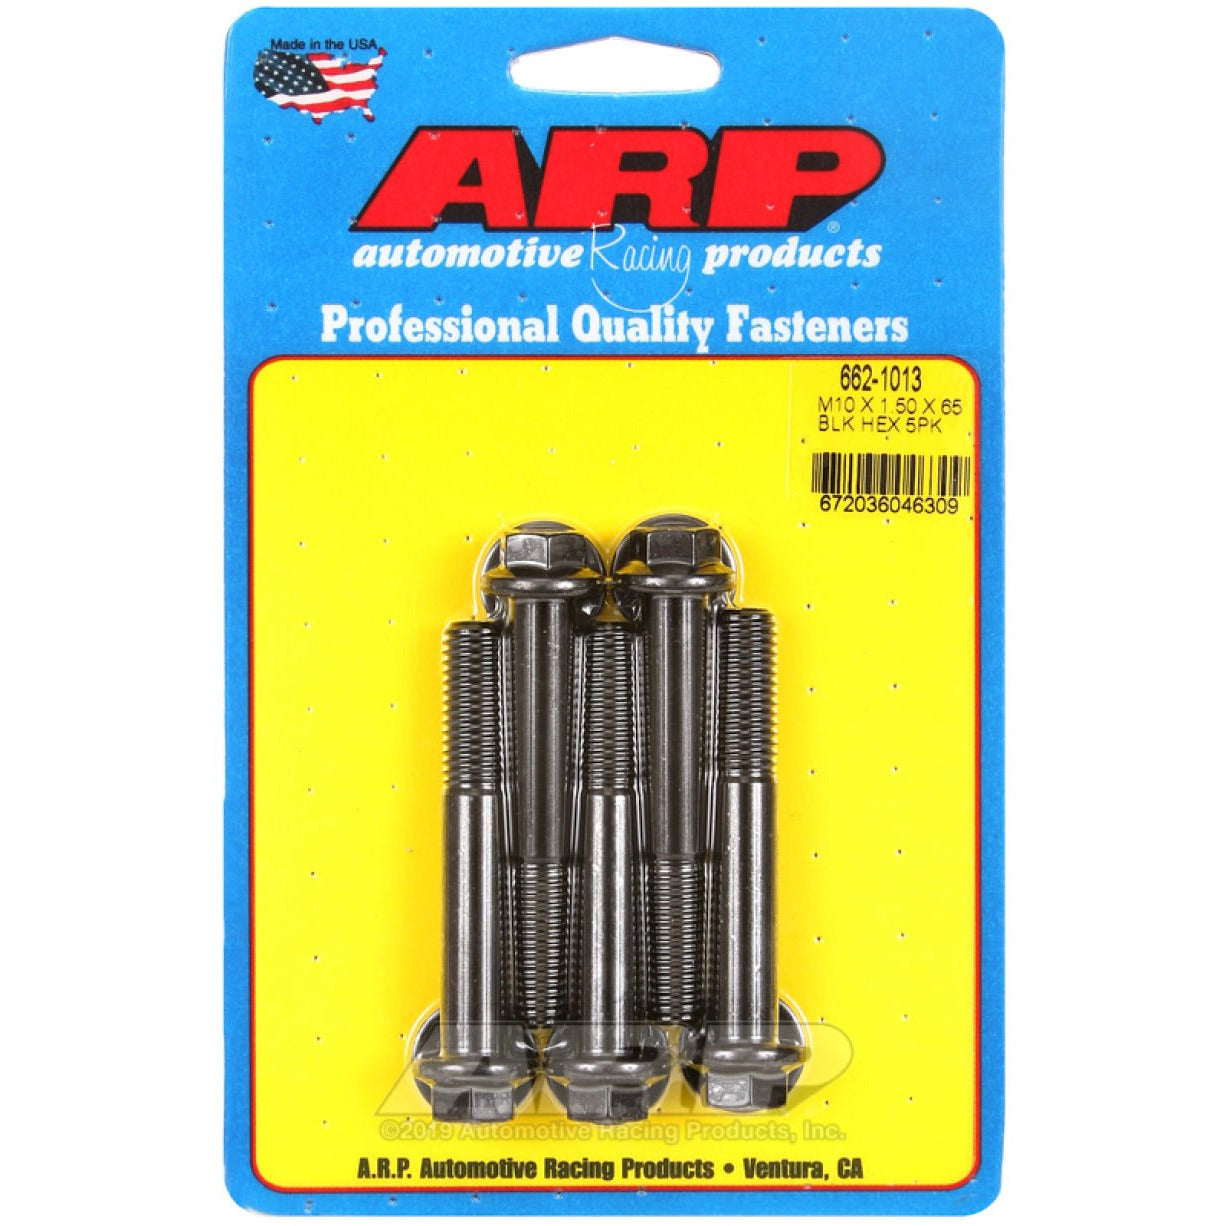 ARP M10 x 1.50 x 65 Hex Black Oxide Bolts (5/pkg) ARP Hardware Kits - Other